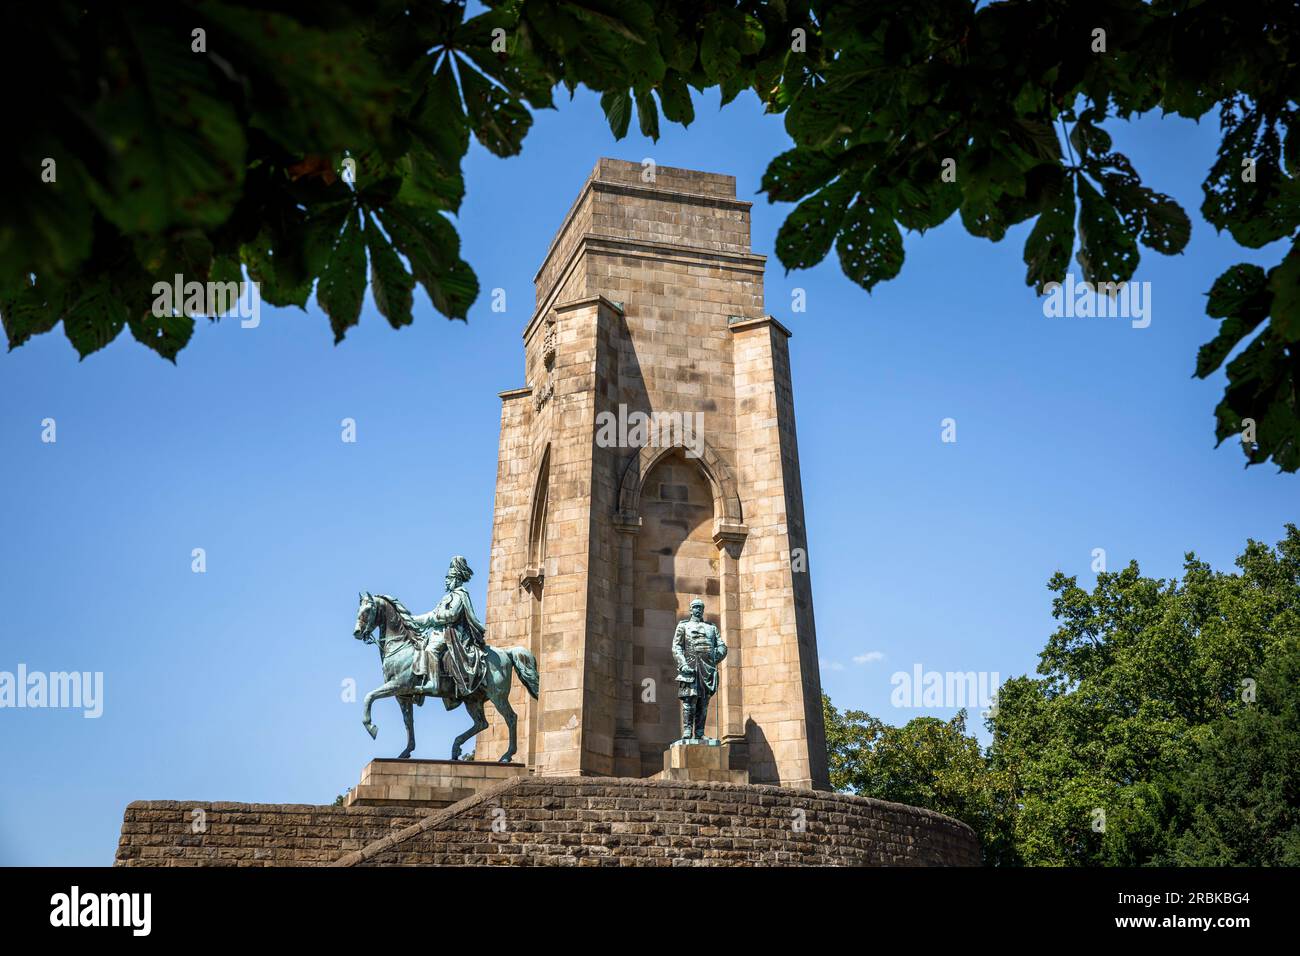 Monumento dell'Imperatore Guglielmo nel distretto di Hohensyburg, Dortmund, Renania settentrionale-Vestfalia, Germania. Kaiser-Wilhelm Denkmal im Stadtteil Hohensyburg, Foto Stock